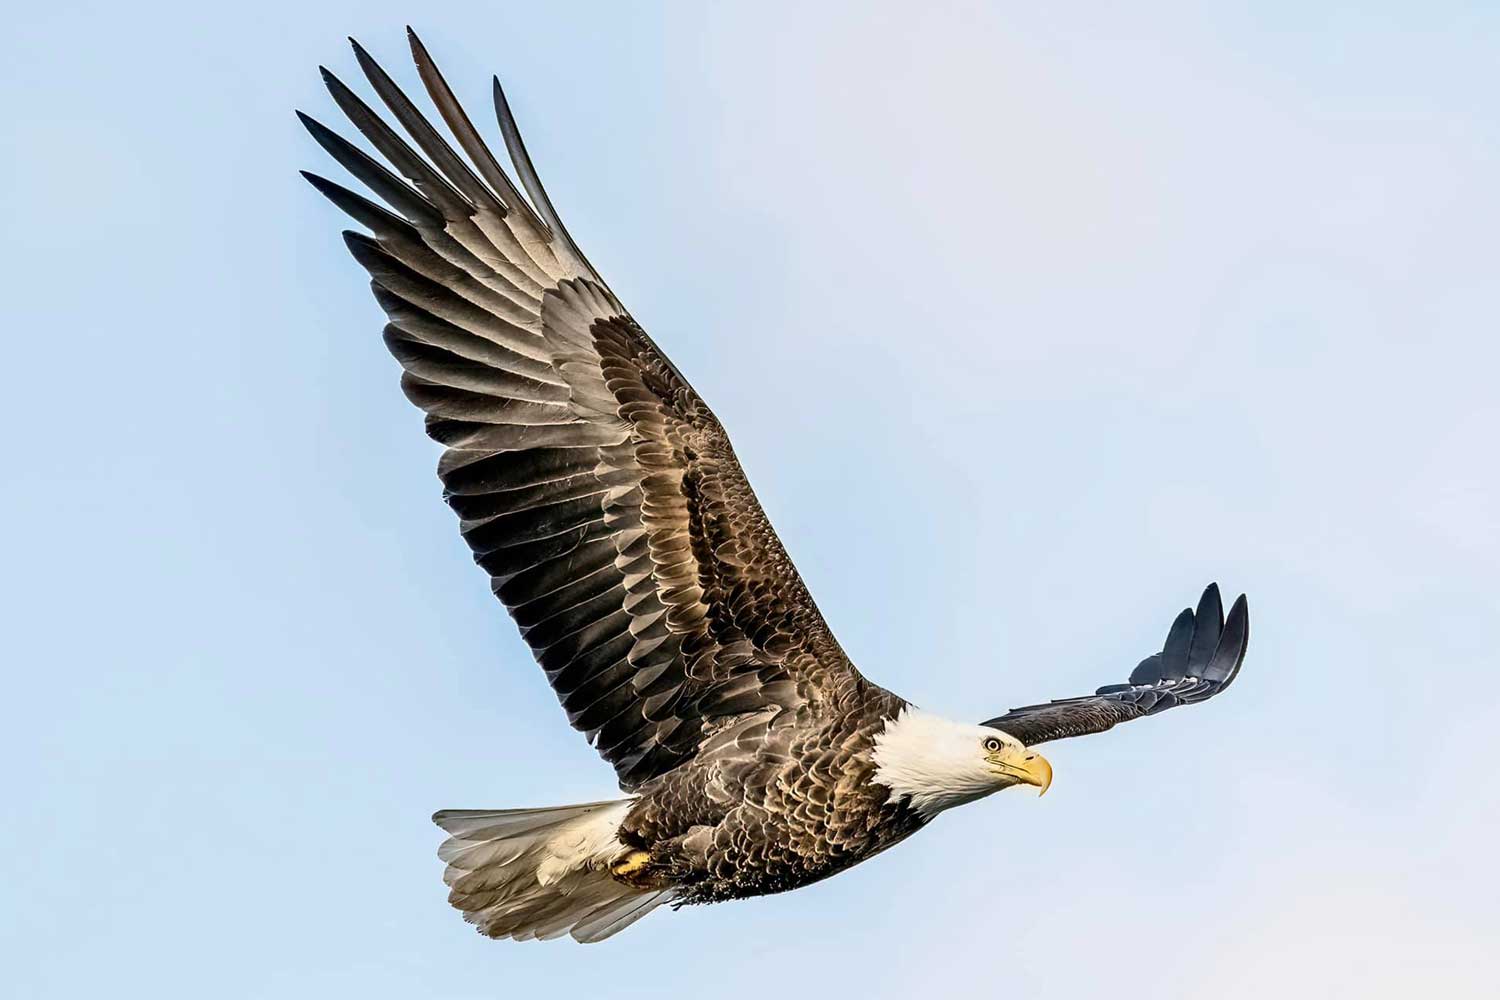 A bald eagle in flight.